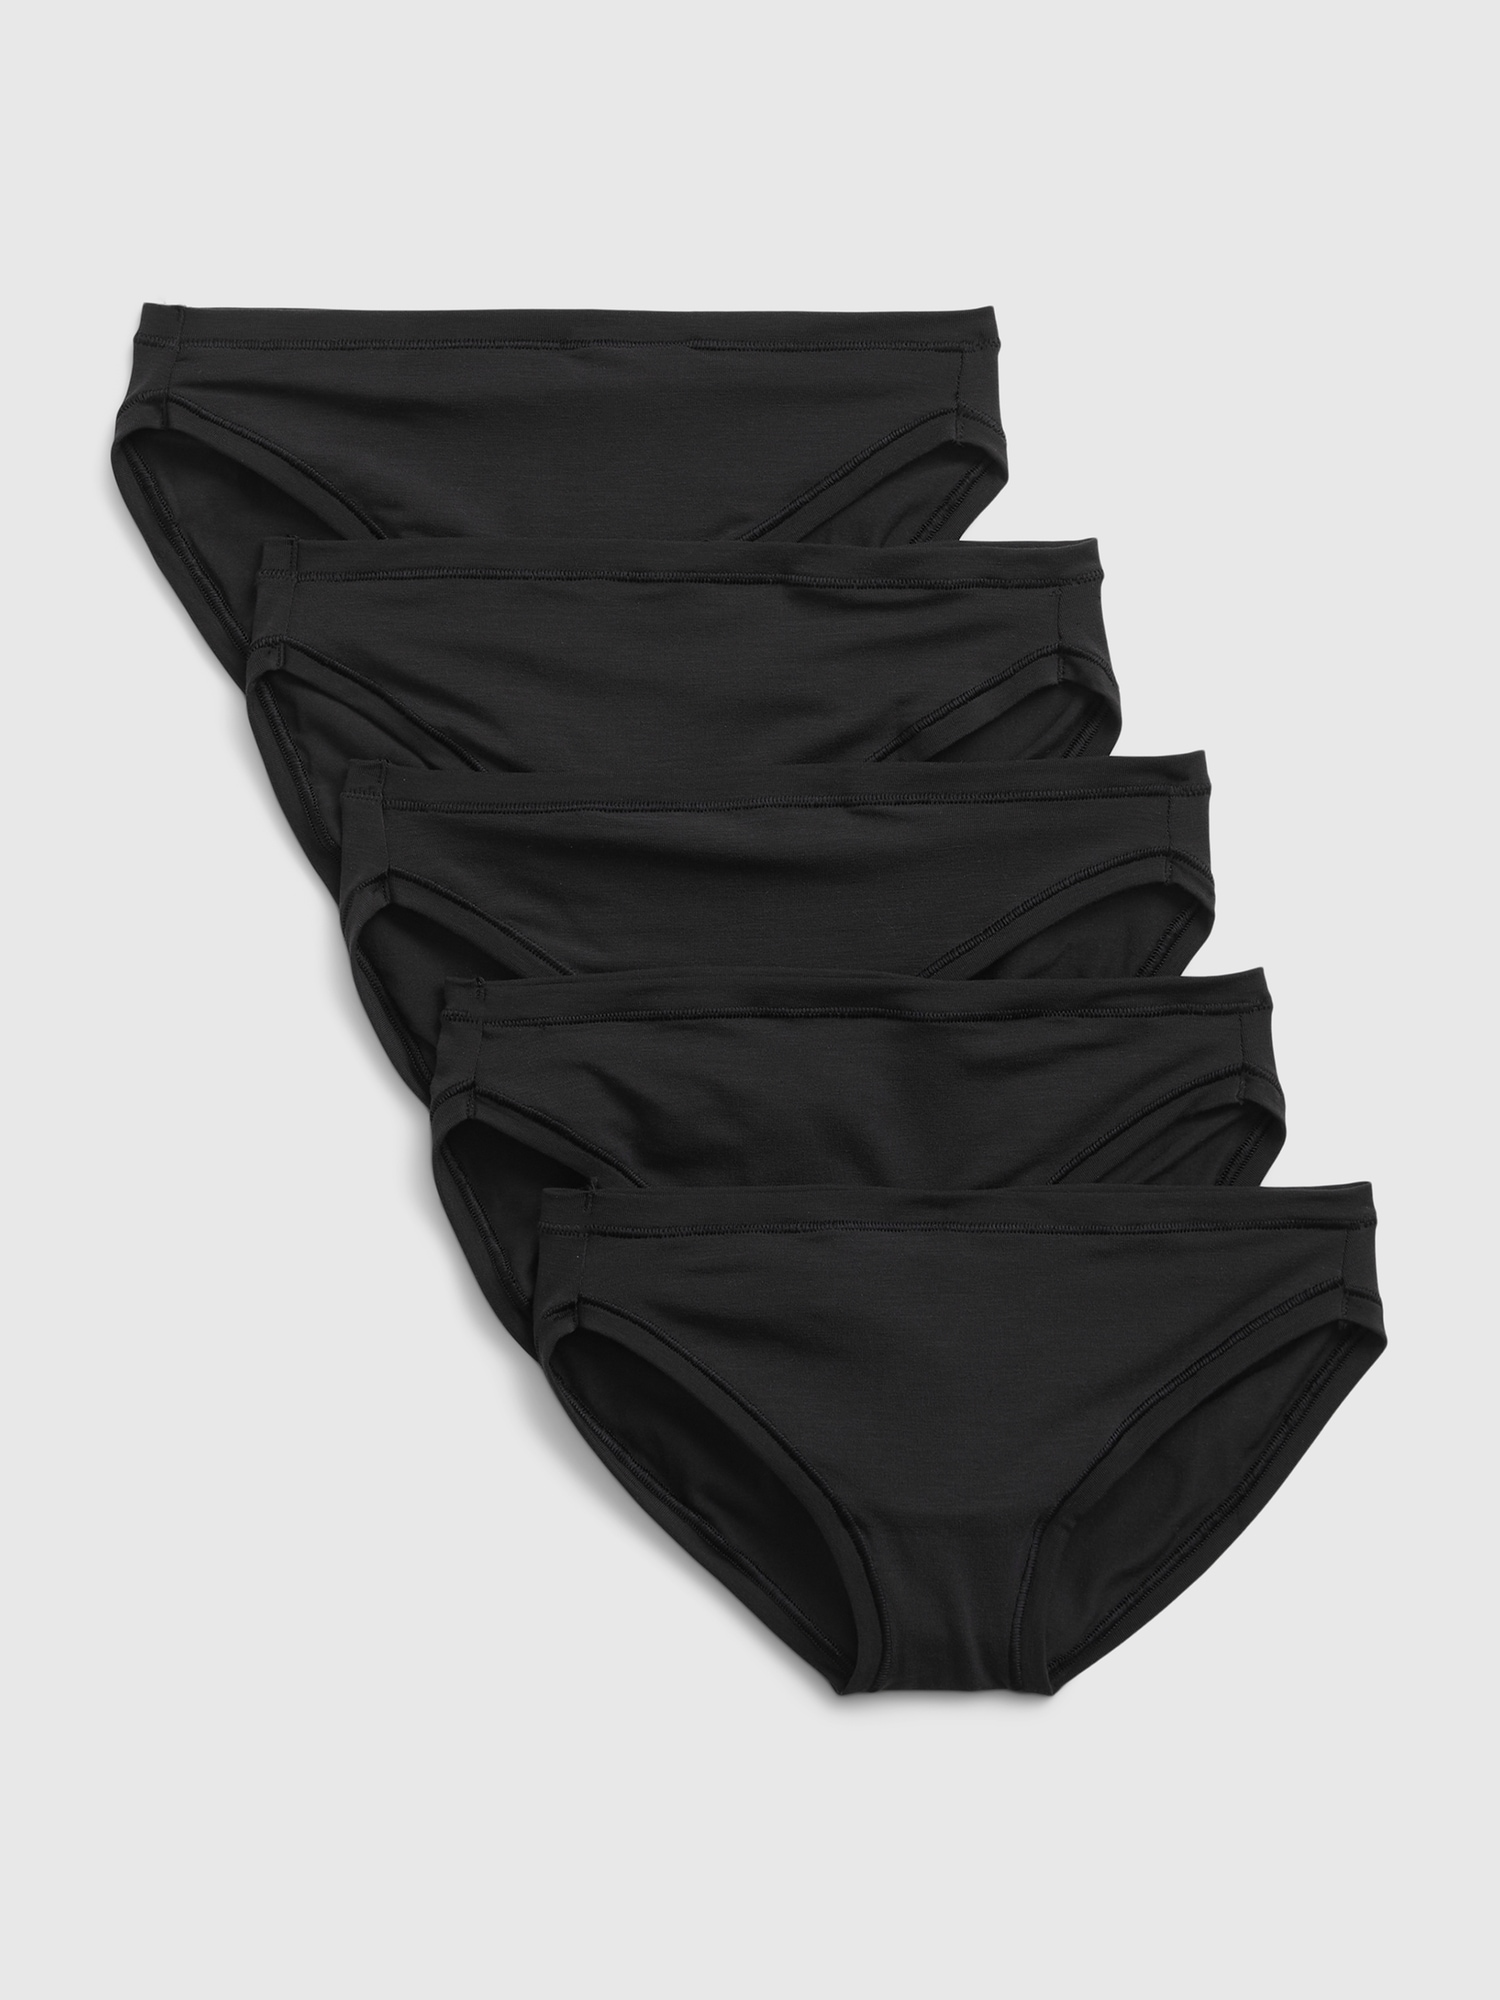 GAP Women's 3-Pack Breathe Thong Underpants Underwear